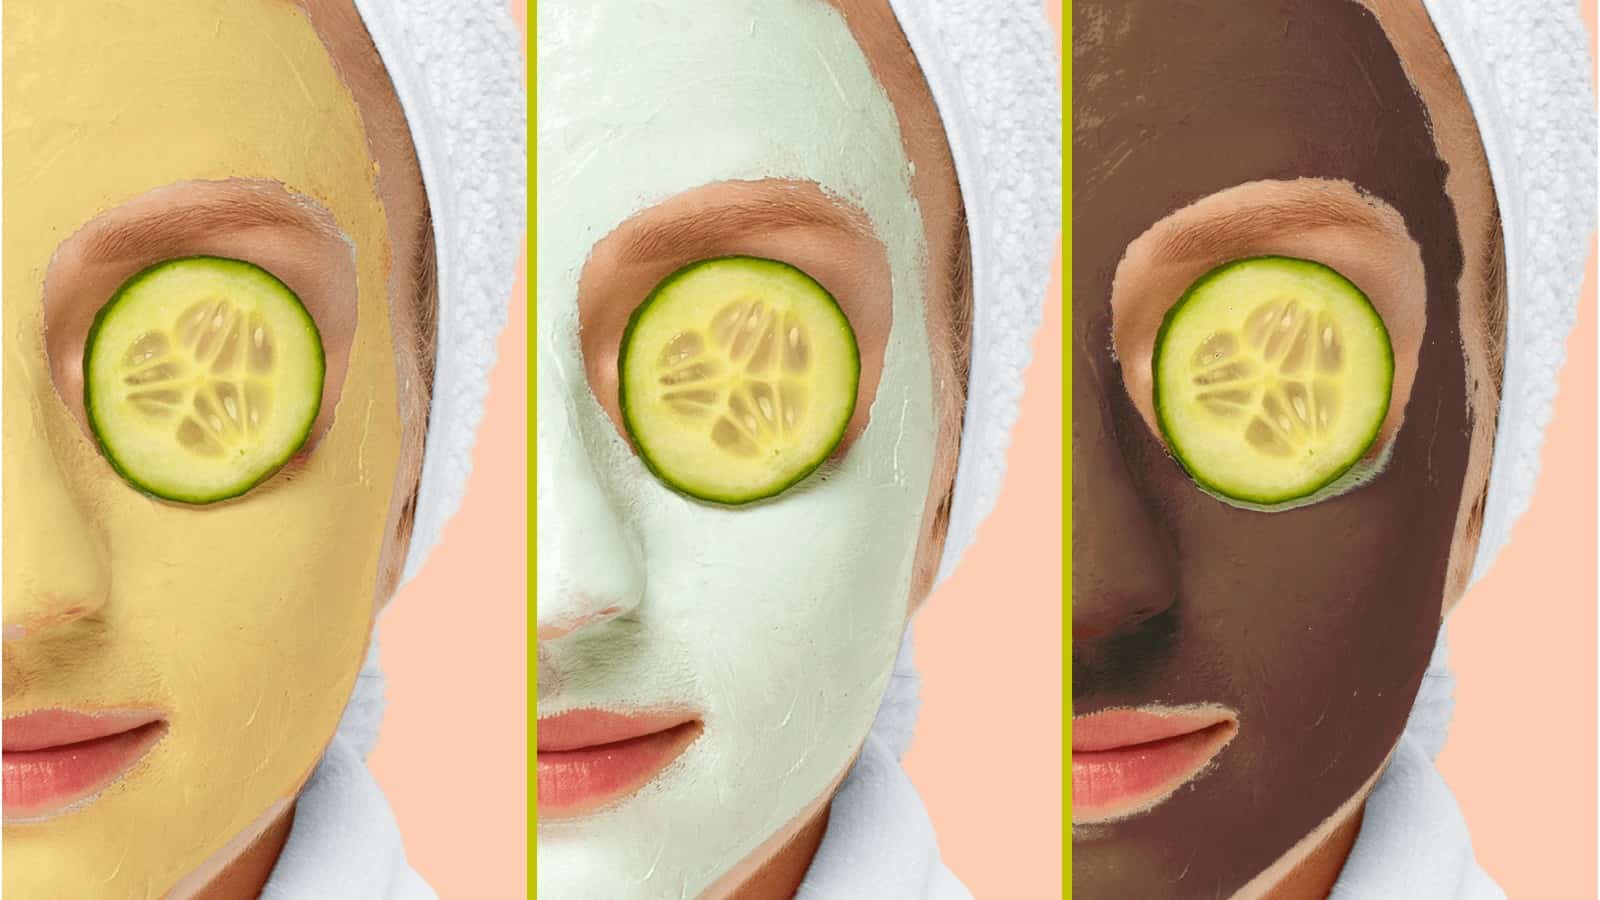 face masks for acne